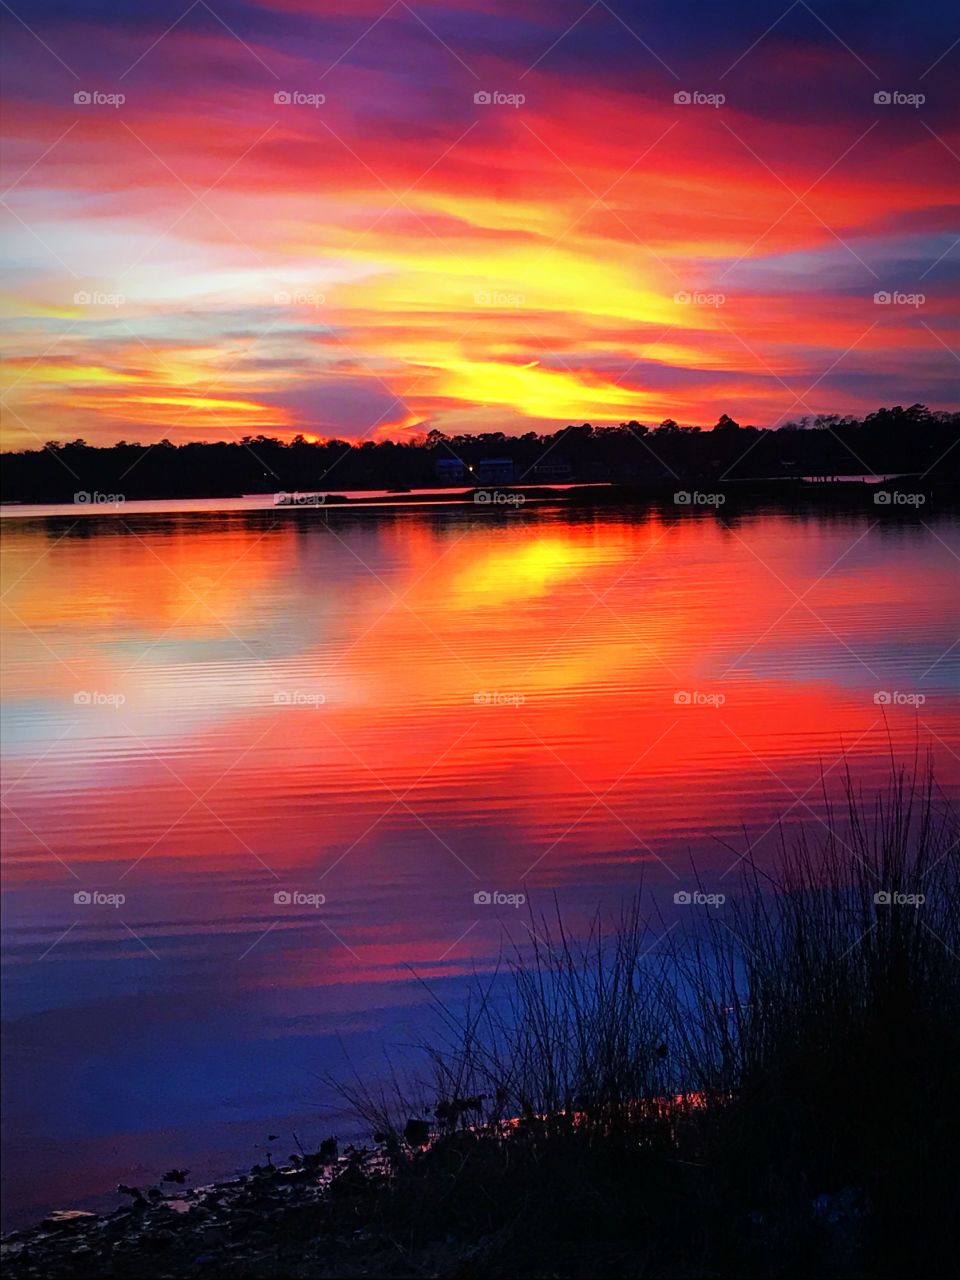 Sunset in Swansboro NC! 